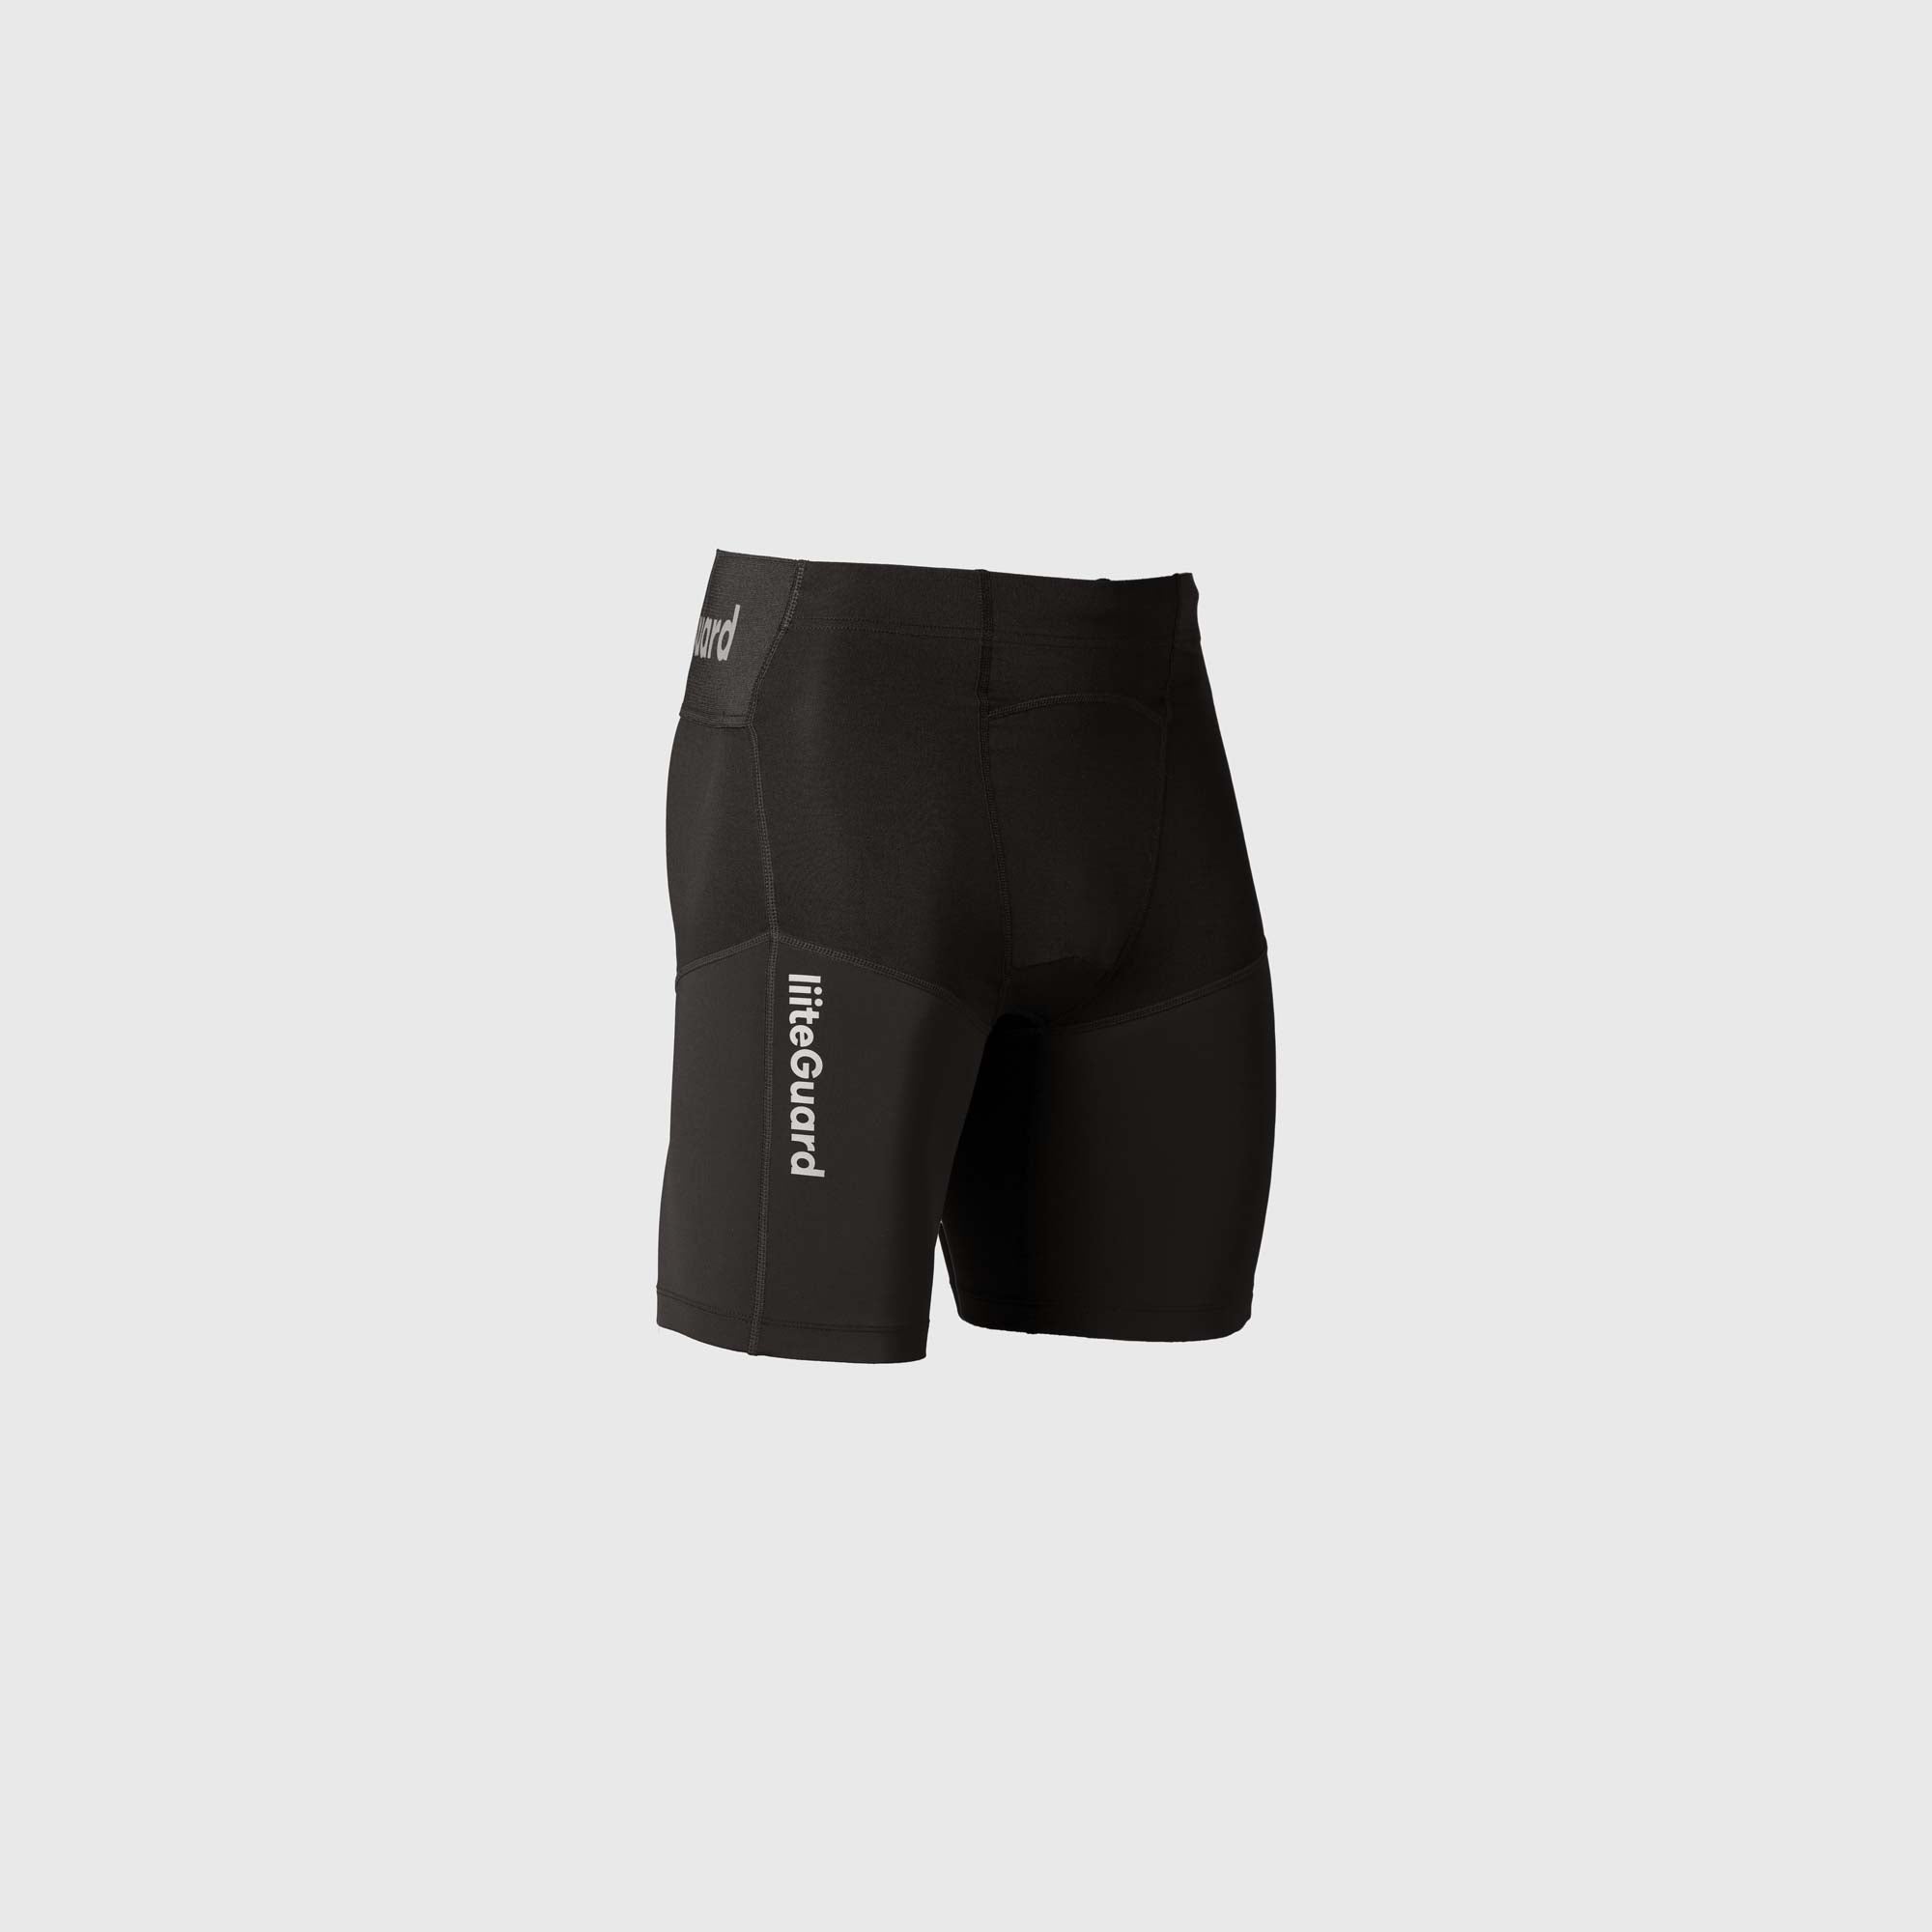 Recoverite Compression Wear - Shop compression shorts, socks, leggings